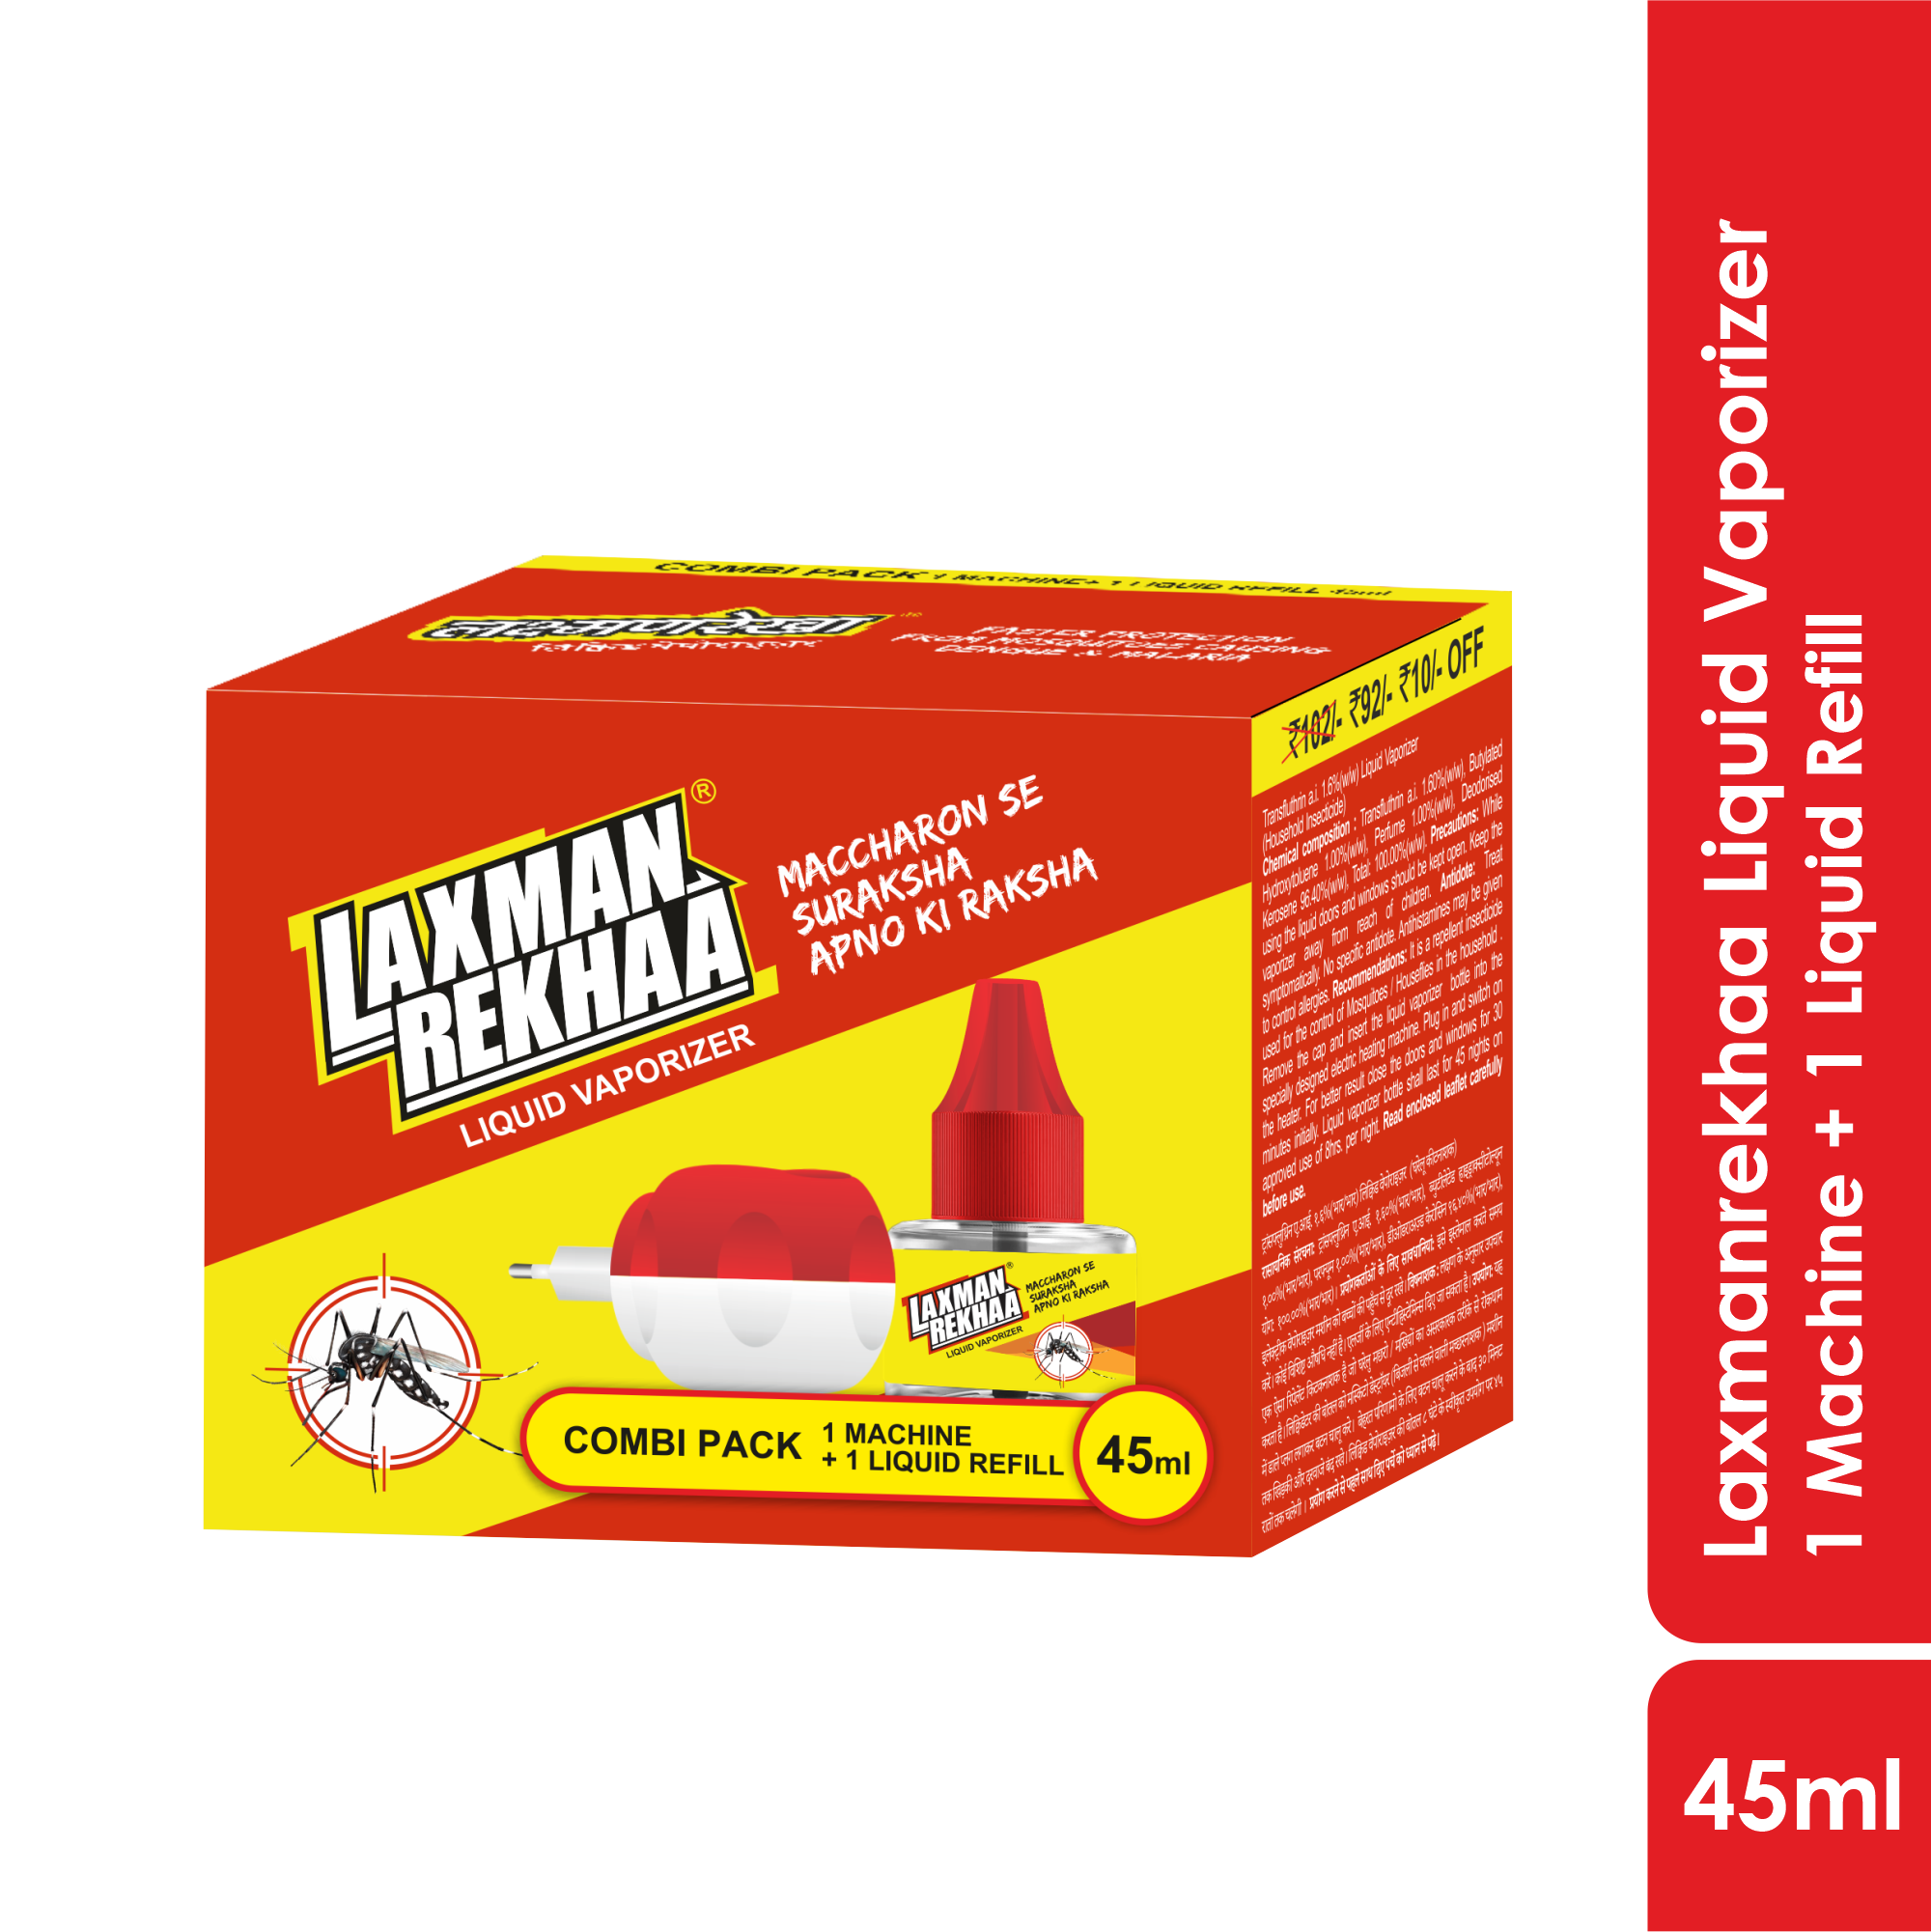 Laxmanrekhaa Liquidator Combi Pack